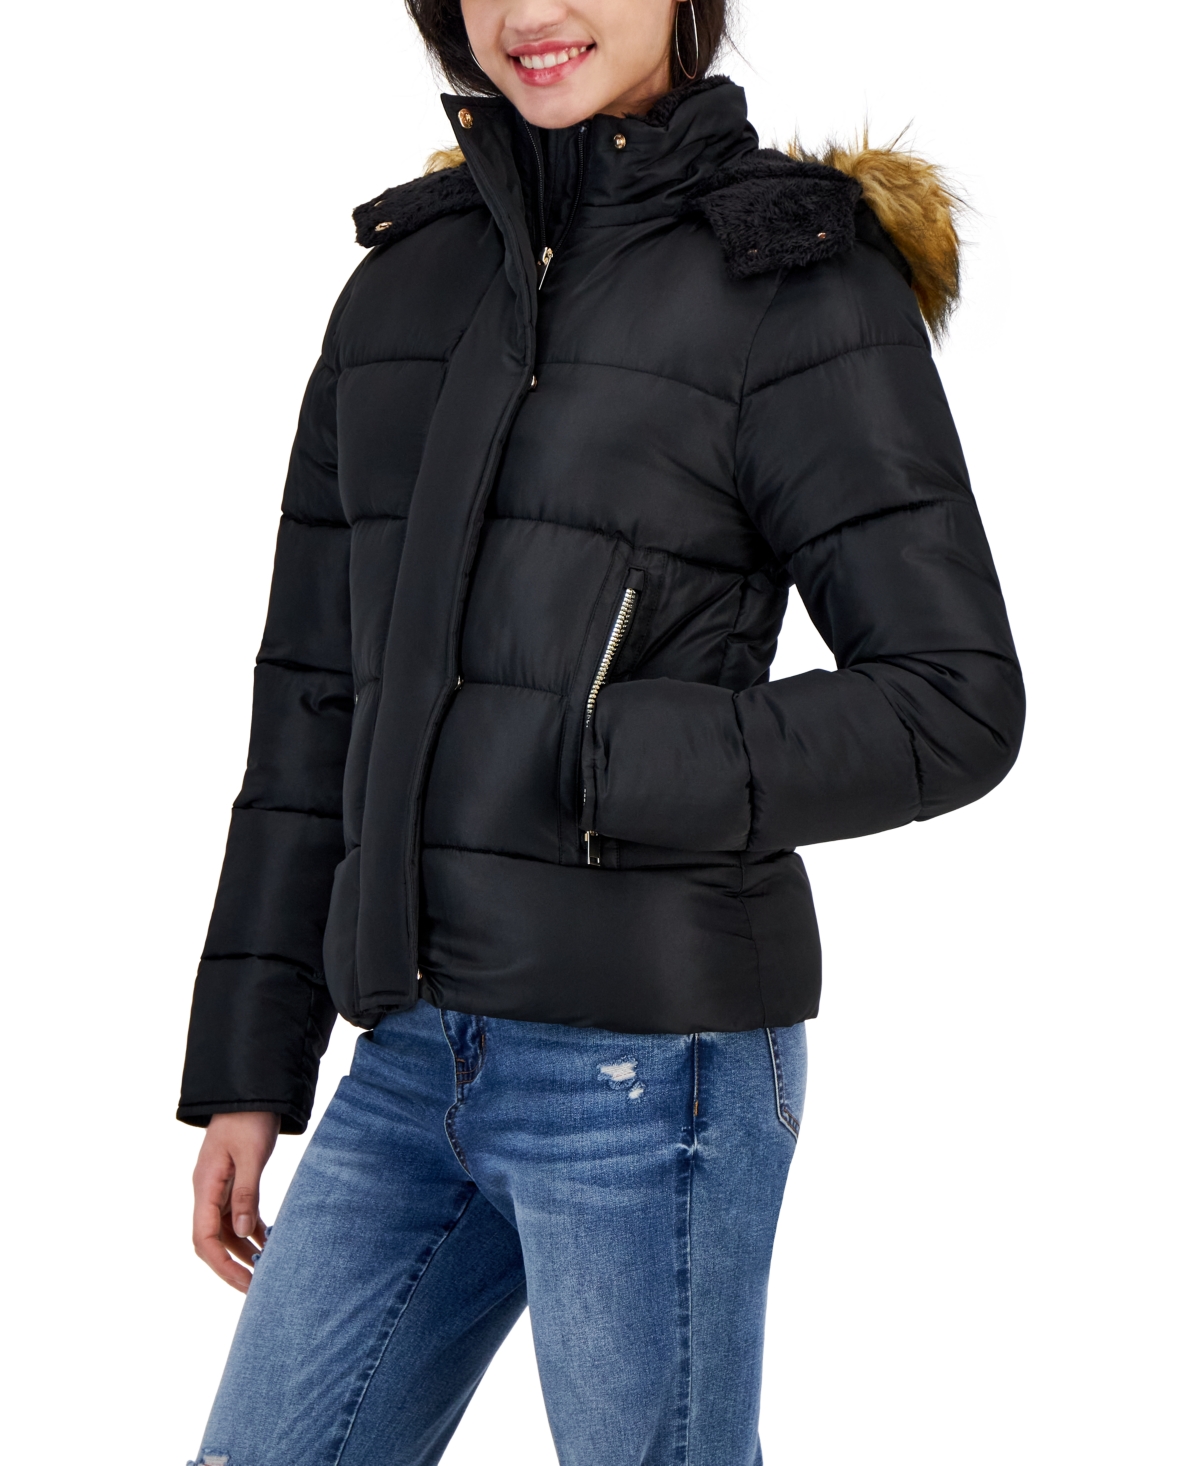 Juniors' Faux-Fur-Trim Hooded Puffer Coat, Created for Macy's - Black